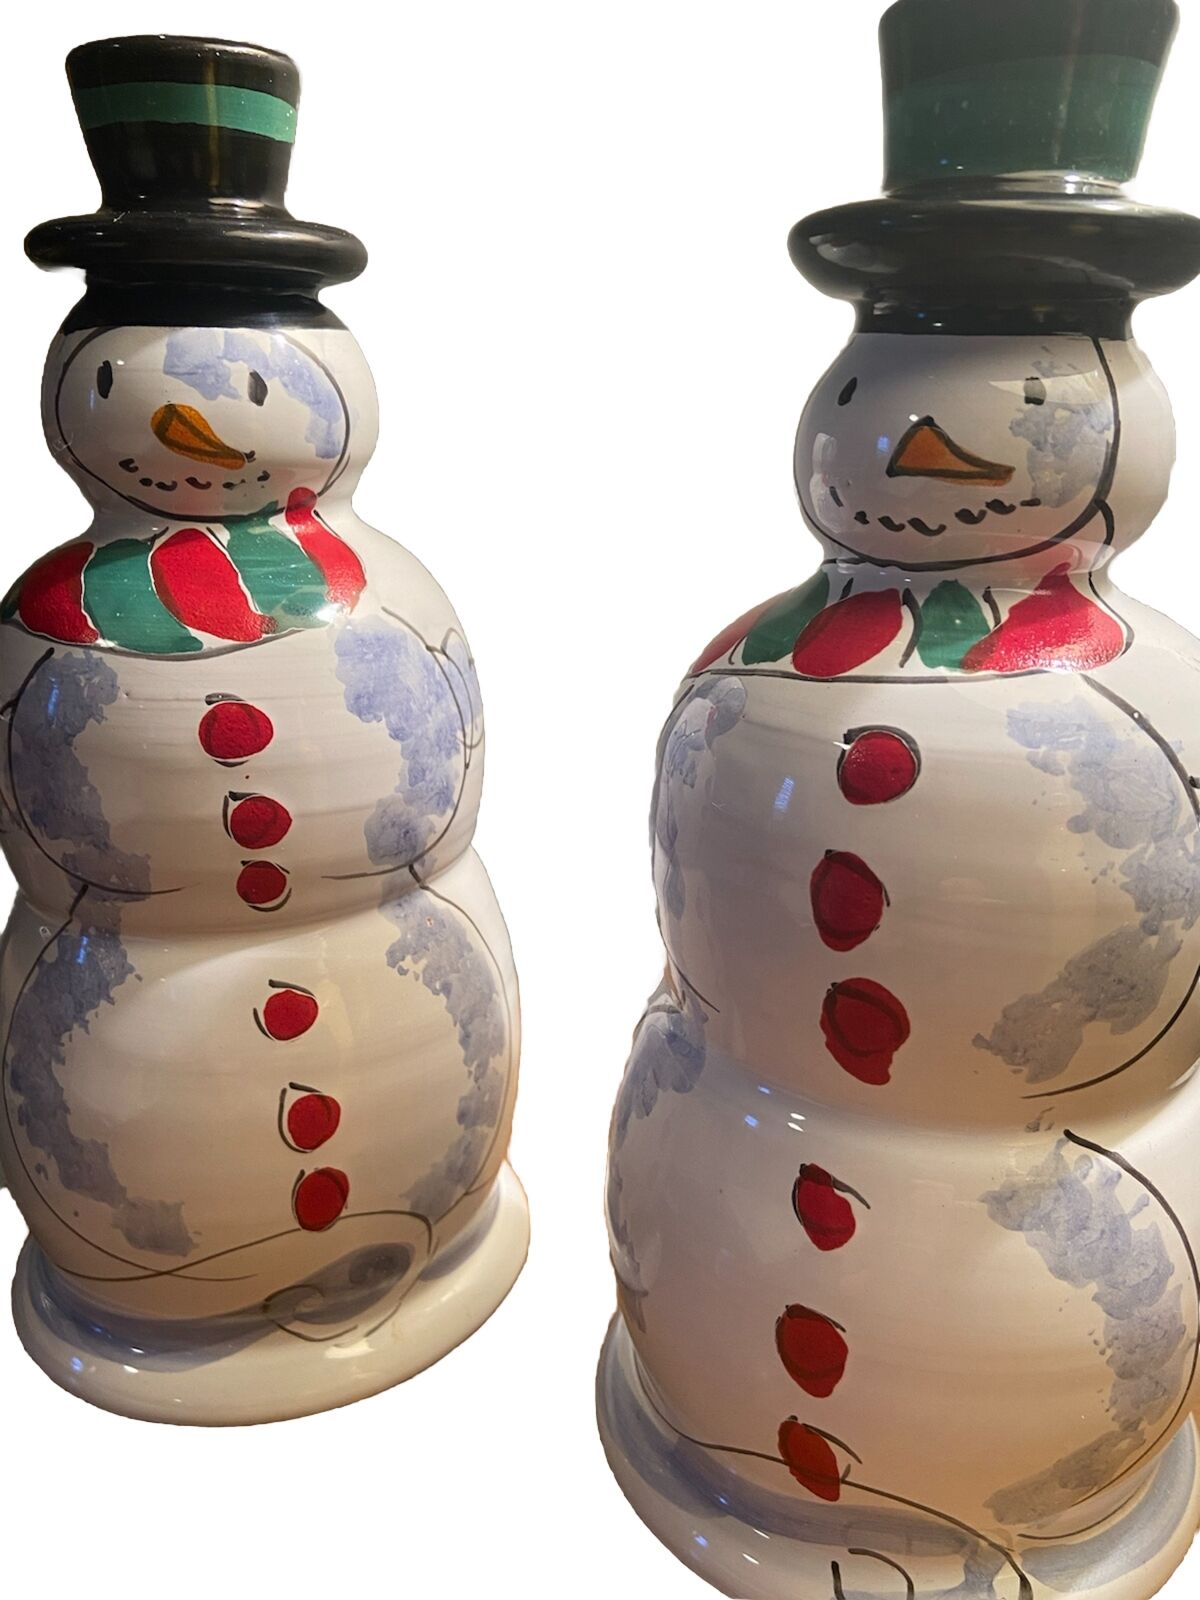 Macys DEI Ceramic Snowmen 8 inch candle stick holders, Holiday / Christmas